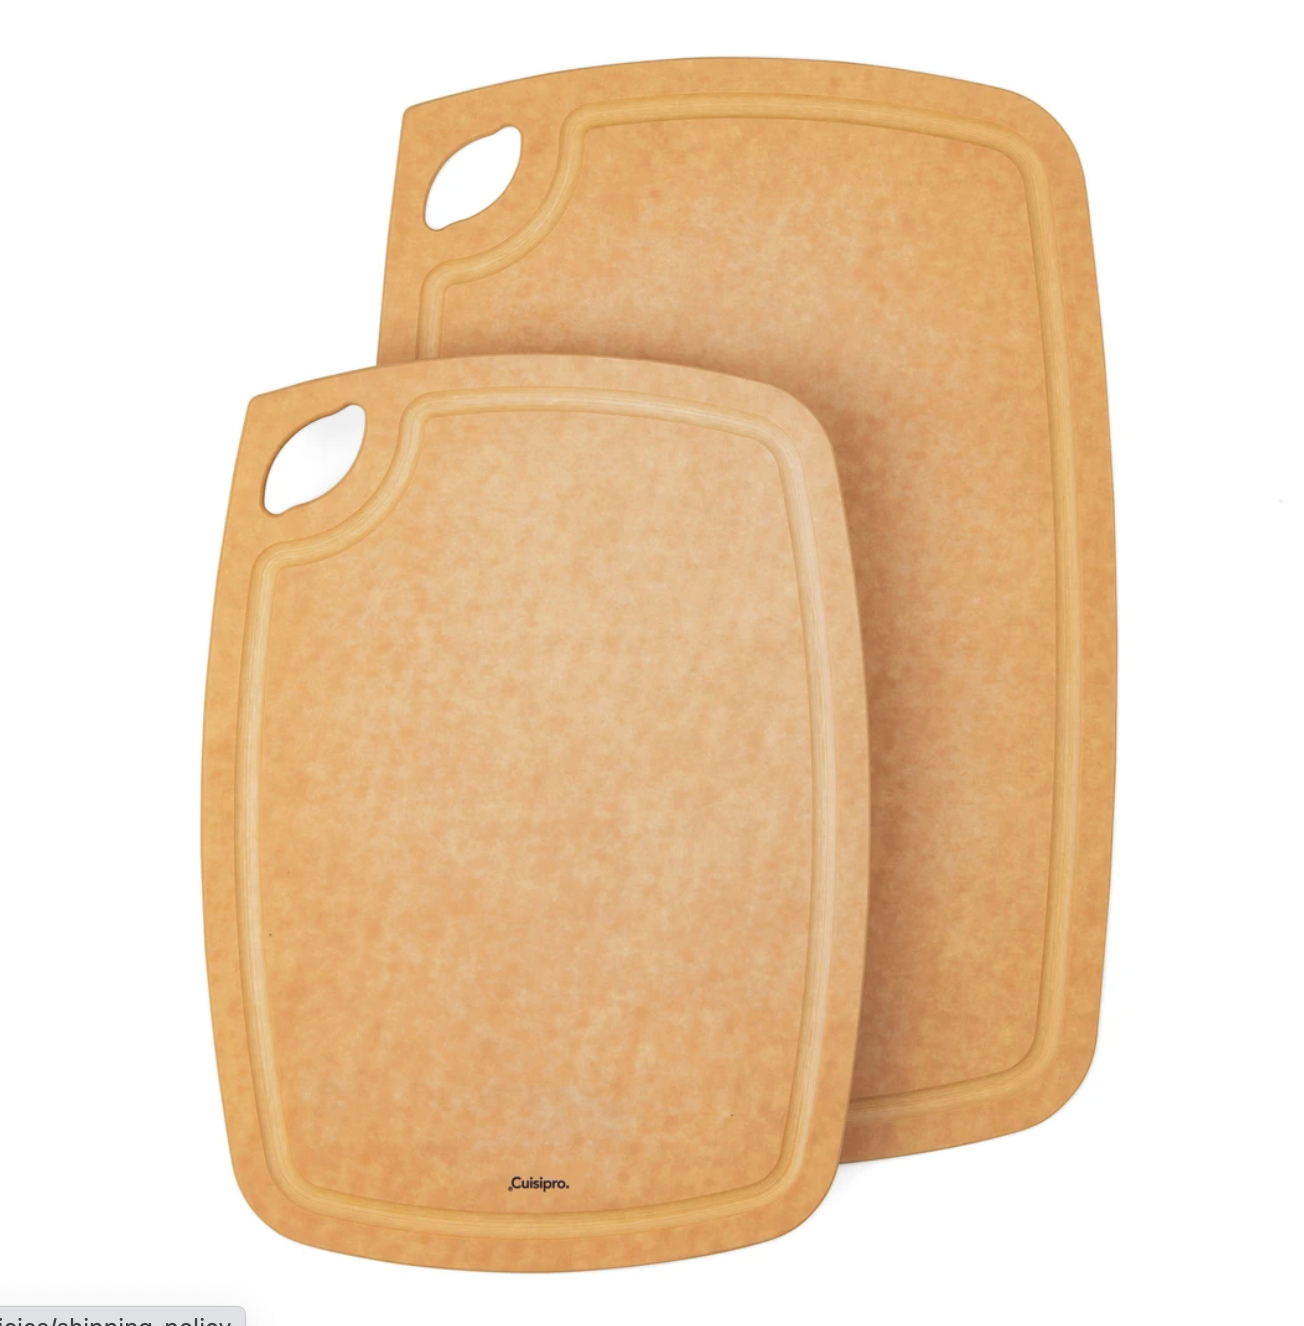 Cuisipro Fibre Wood Board Cutting Board – 10.5” x 15.75” x 0.25”